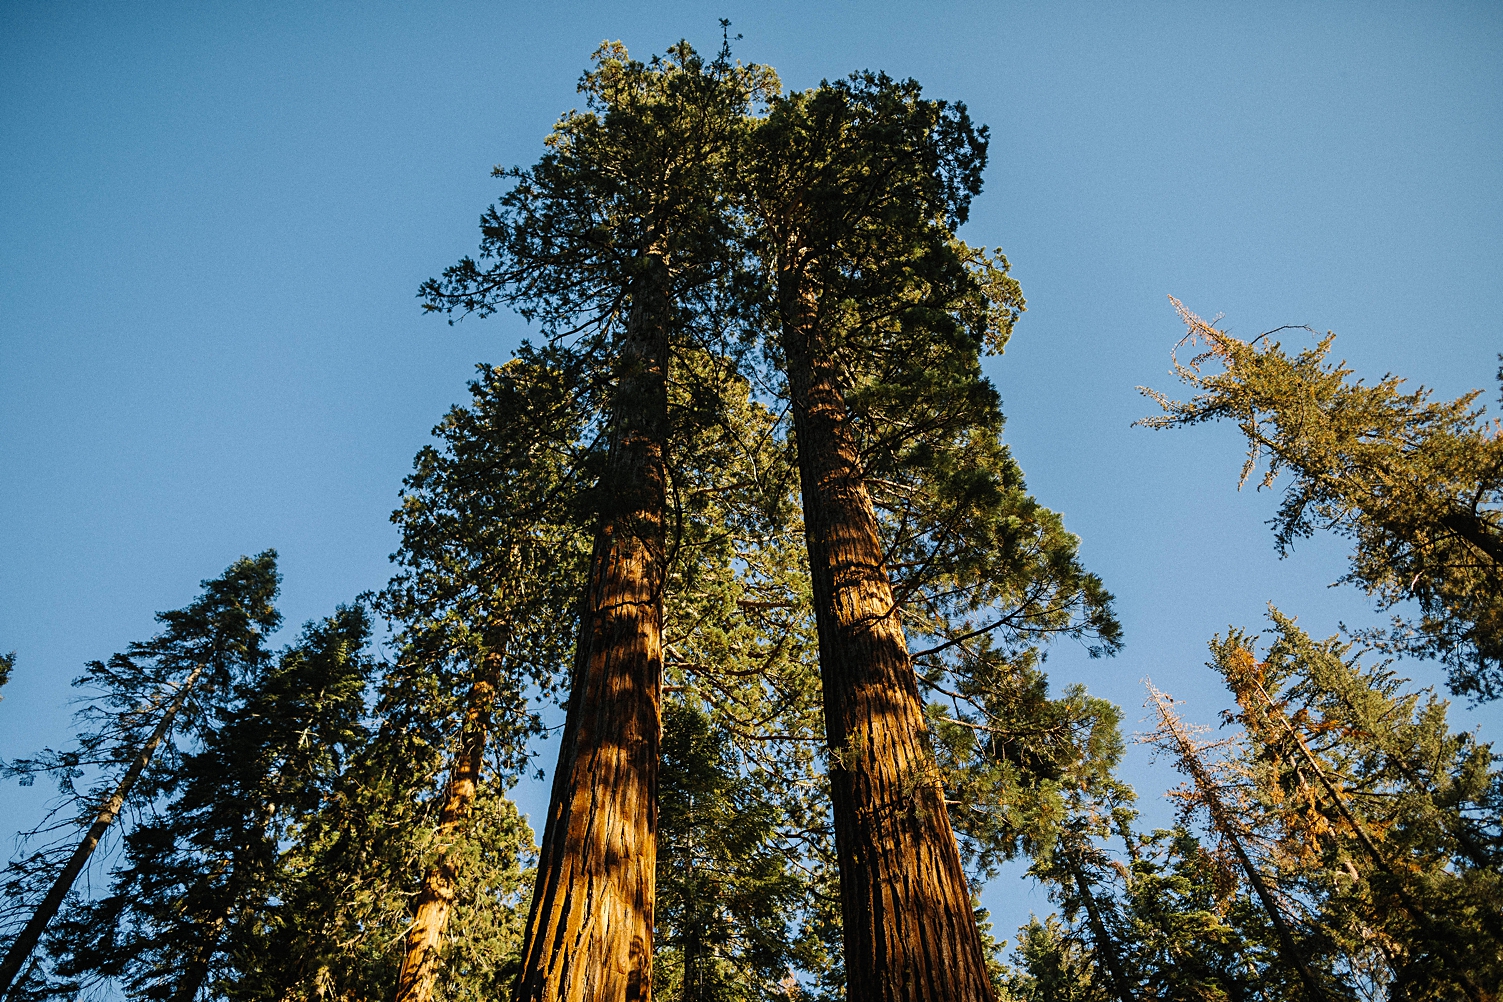 Yosemite redwood trees